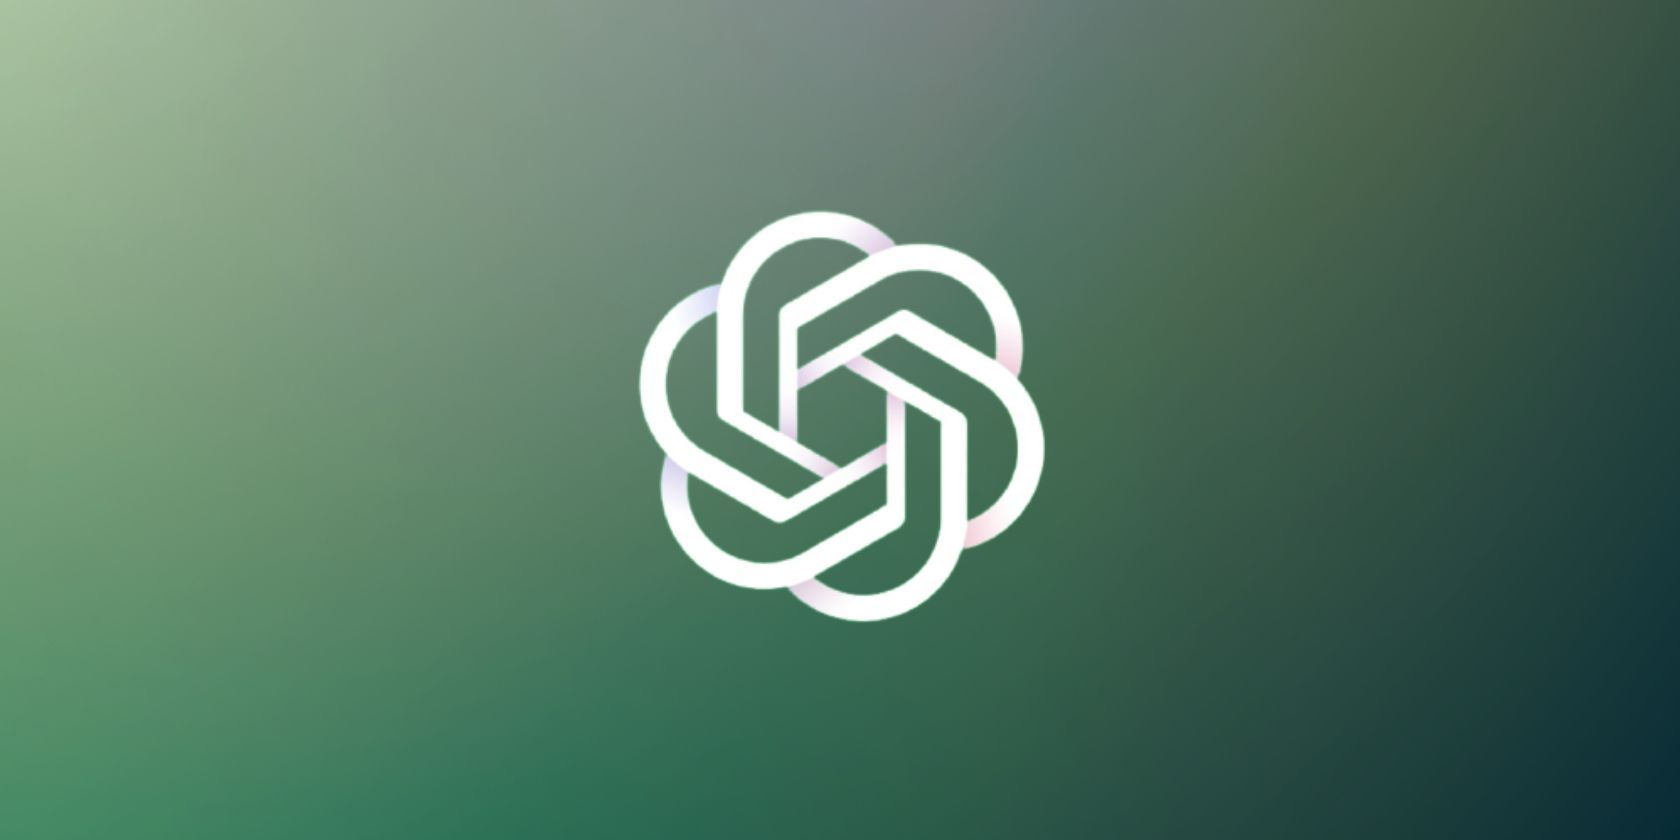 ChatGPT logo on green background